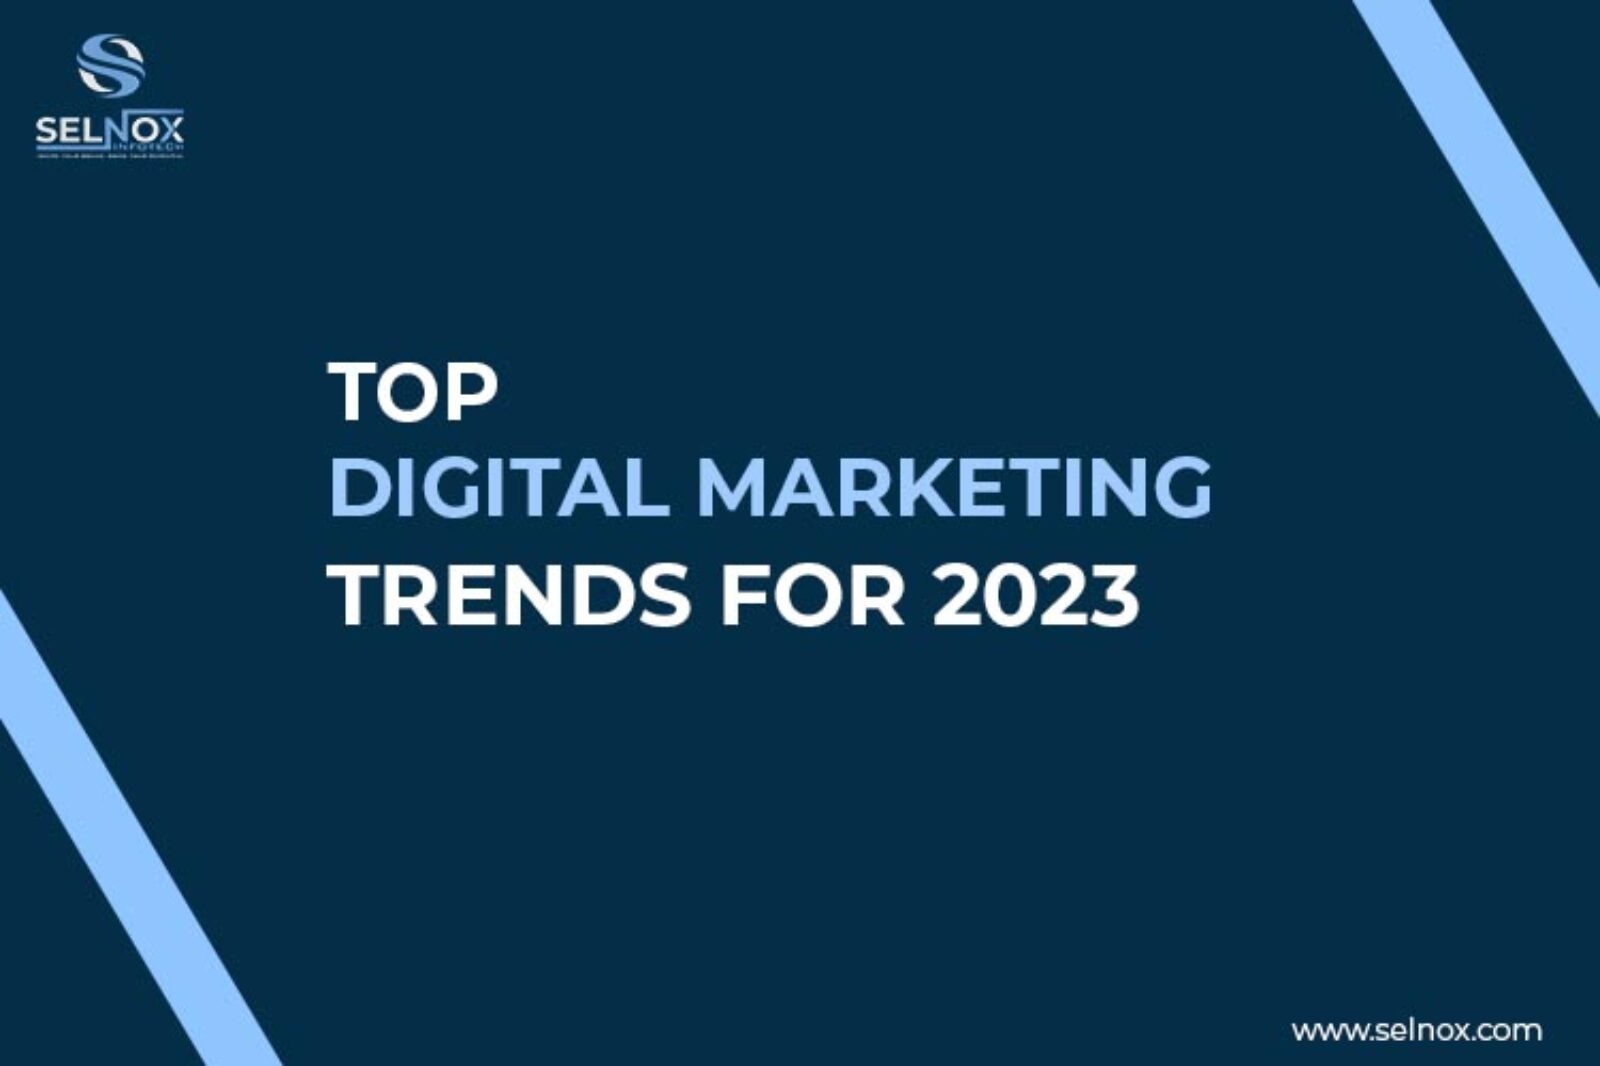 Top digital marketing trends for 2023